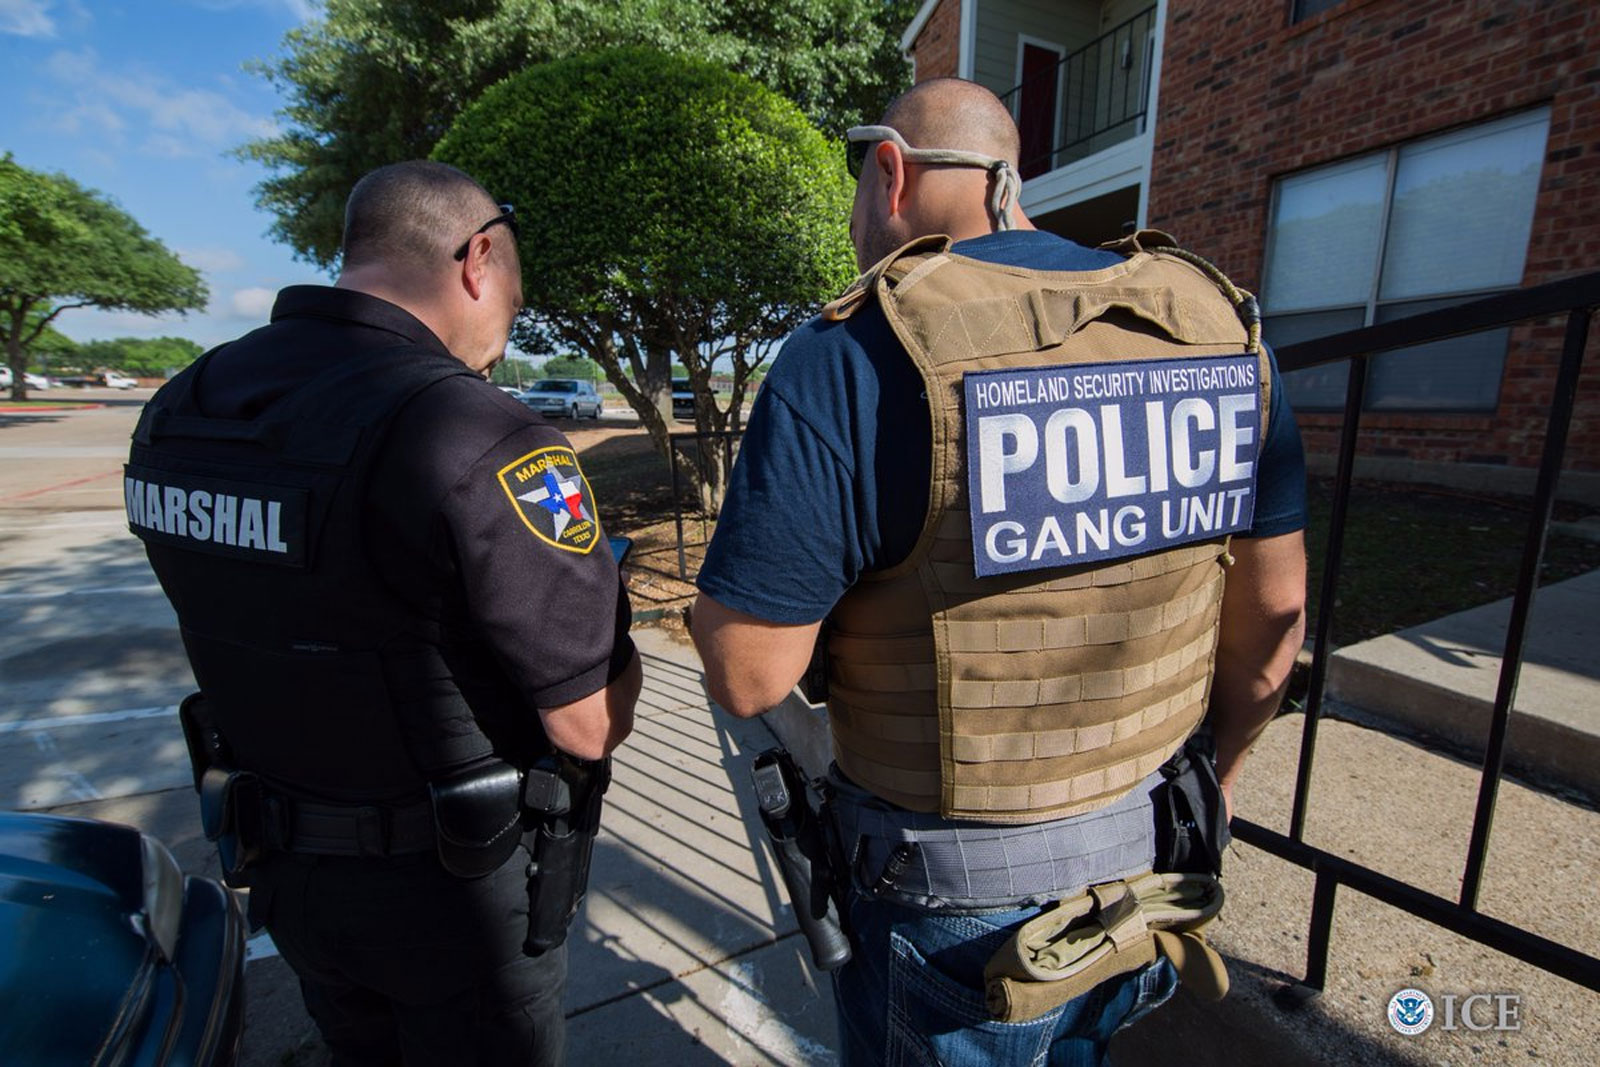 Operation unit. США Police gang Unit. Sheriff gang Unit. Gang Unit полиция. Security Enforcement Police.